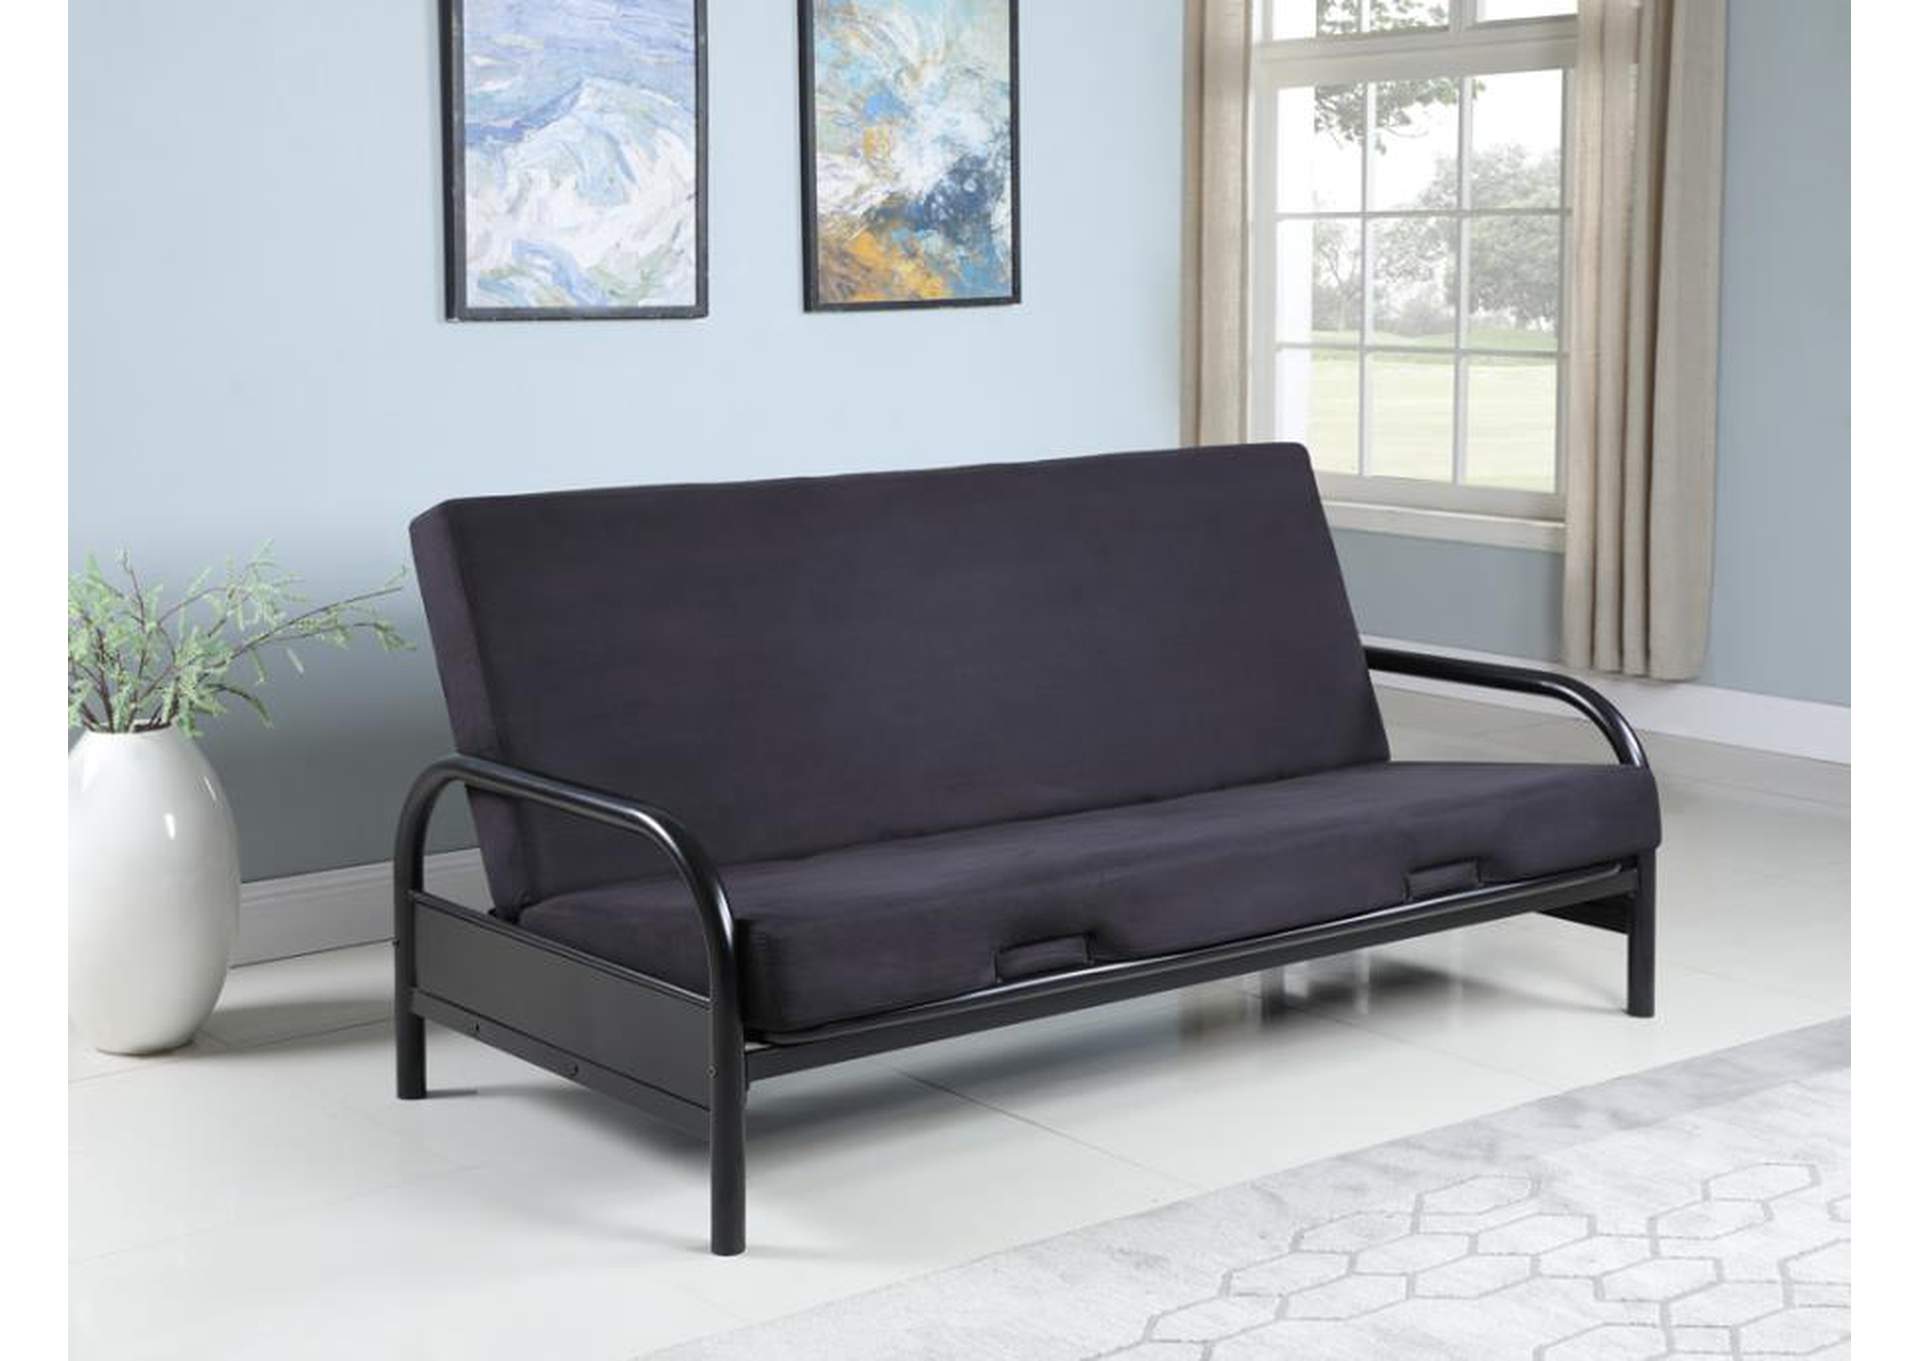 Tufted Futon Glossy Black,Coaster Furniture